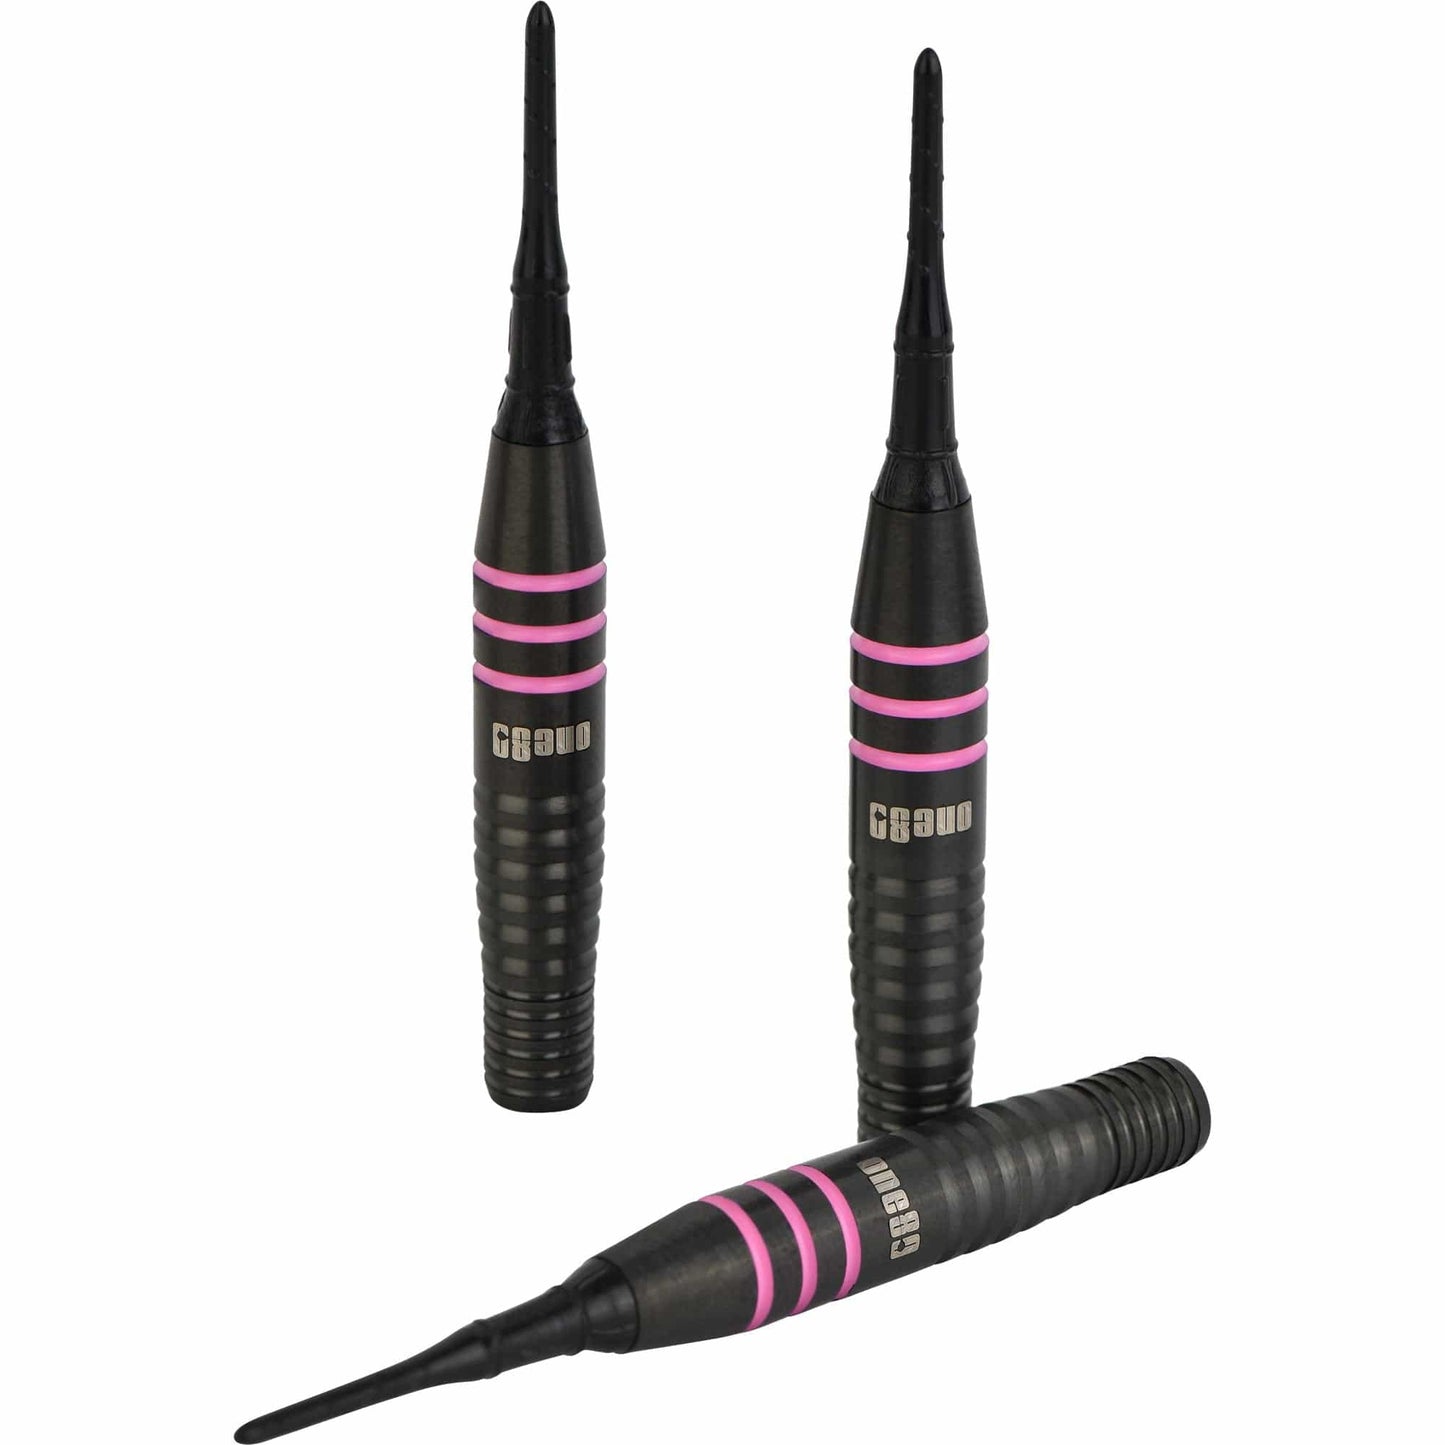 One80 Raise B Darts - Soft Tip - Black - Pink Rings 18g